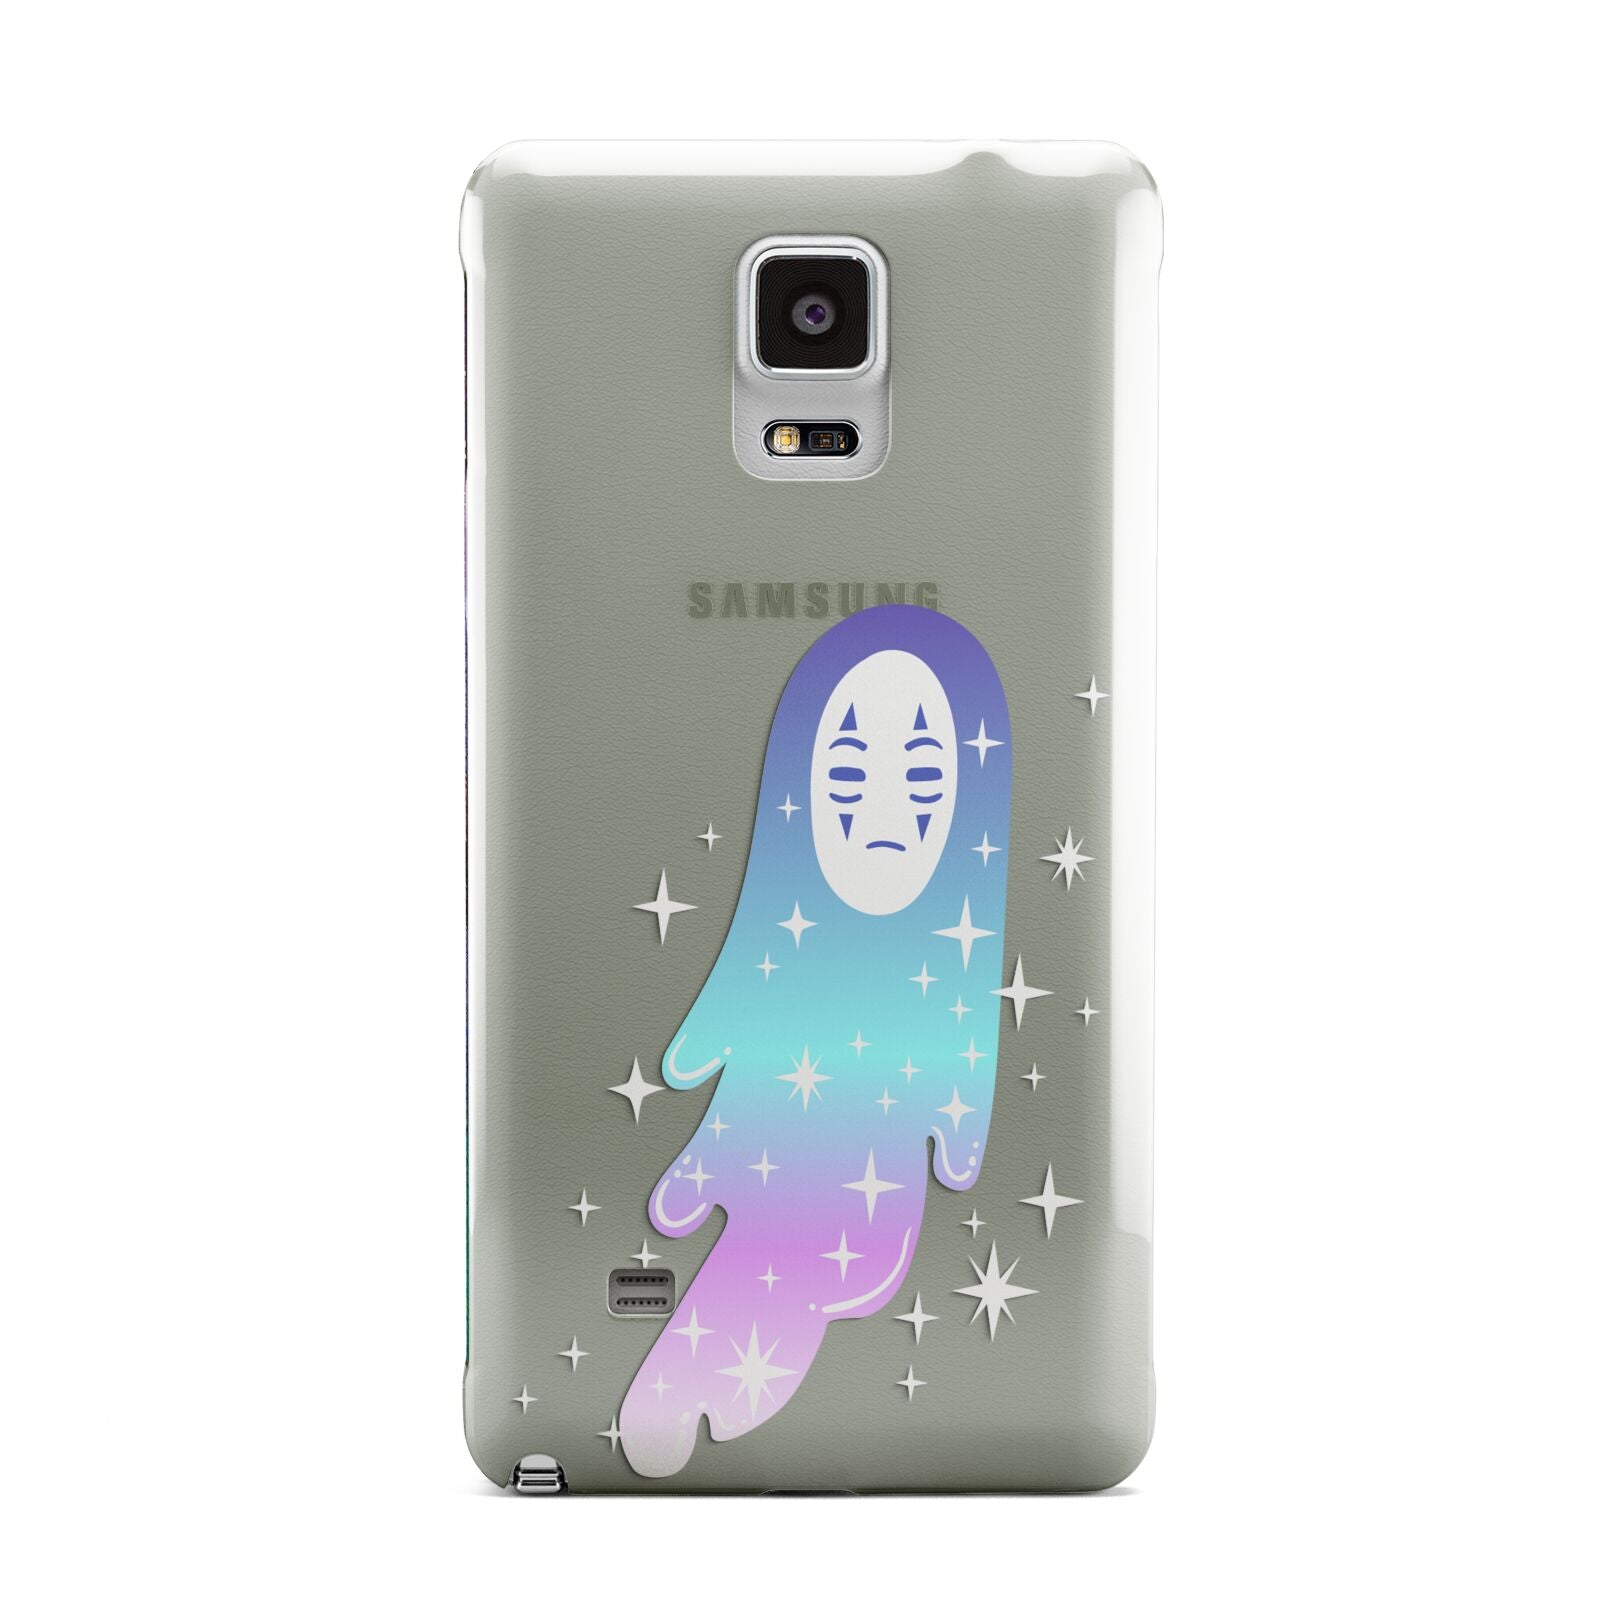 Starry Spectre Samsung Galaxy Note 4 Case